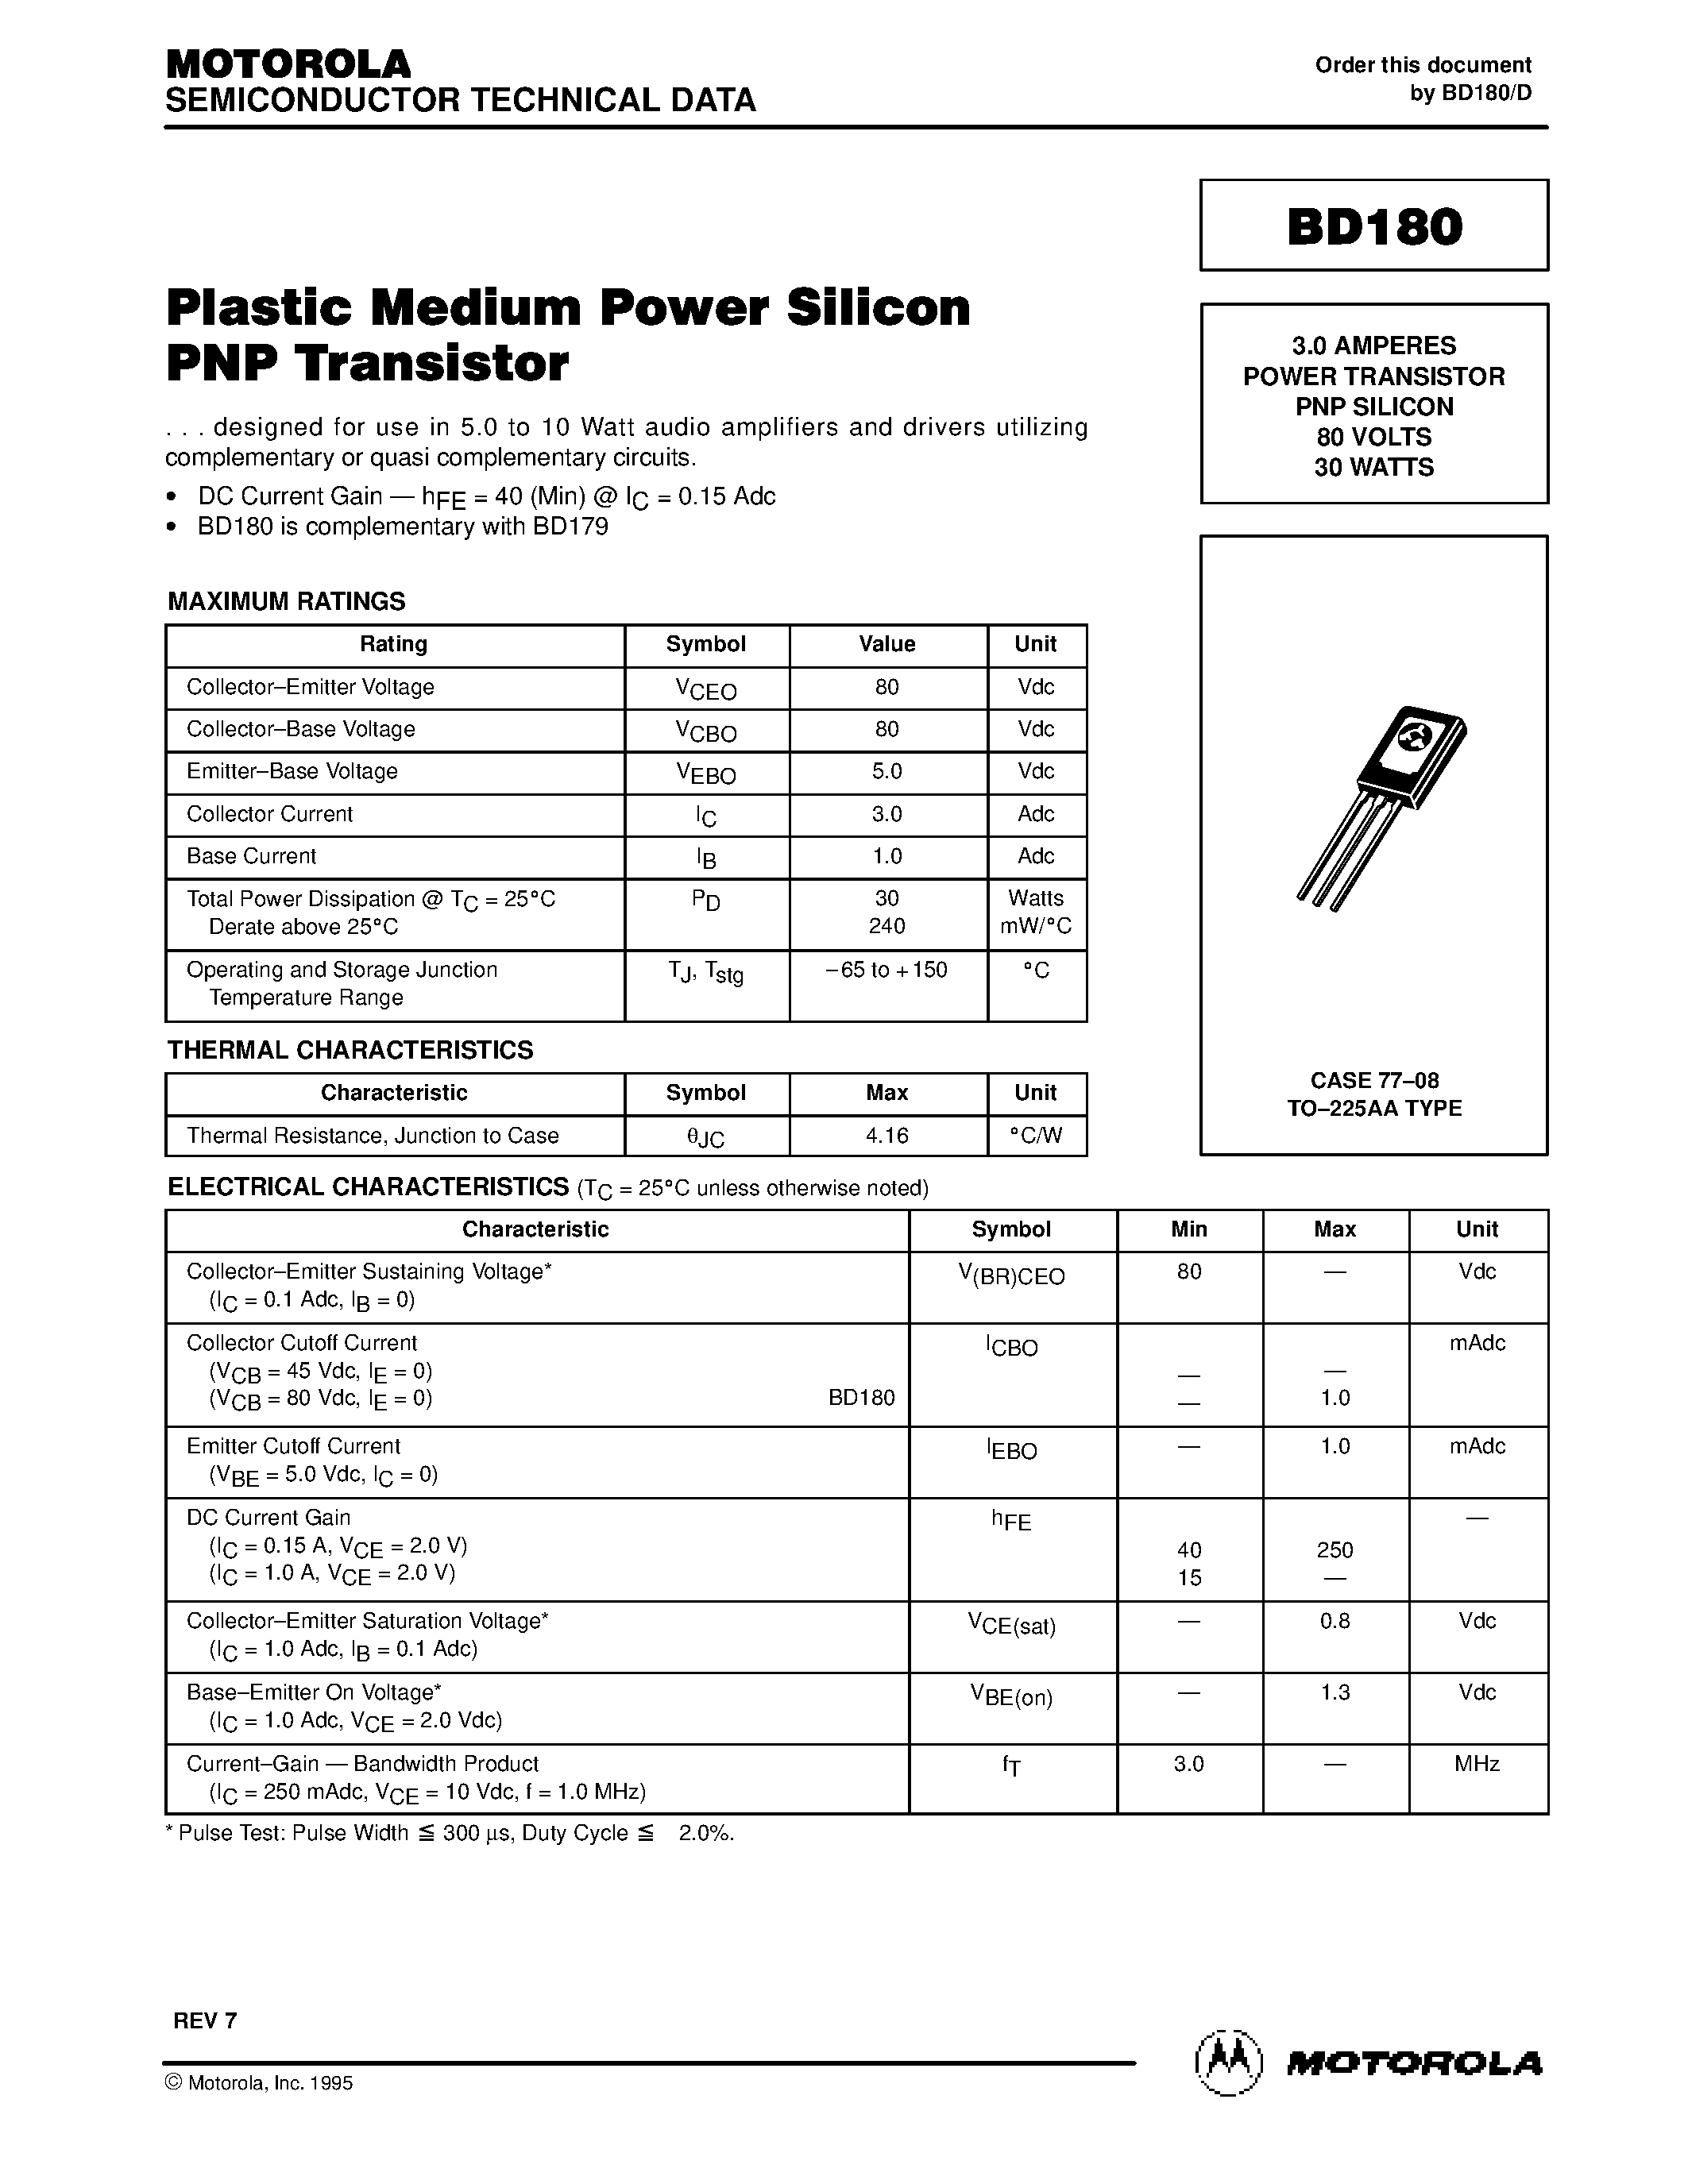 Datasheet BD180 - Plastic Medium Power Silicon PNP Transistor page 1